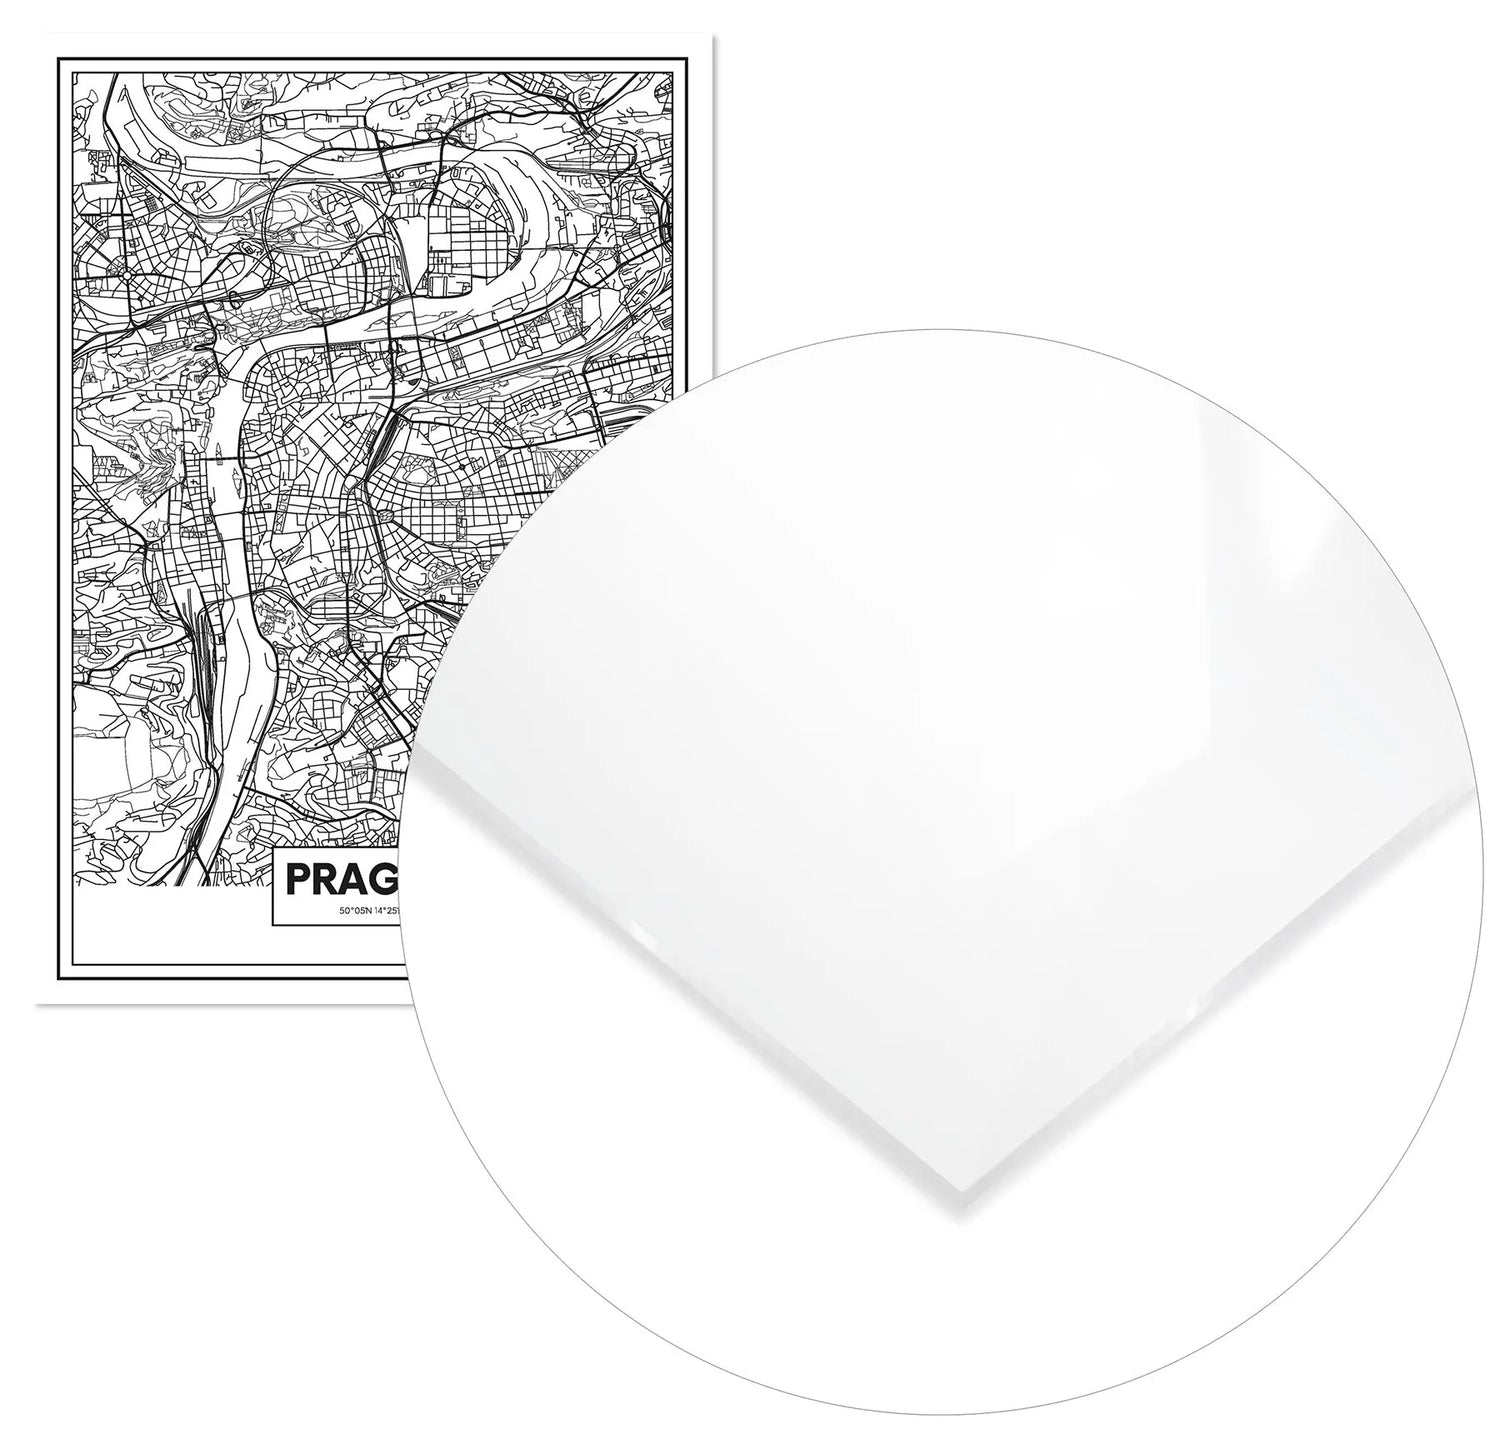 Cuadro Mapa Praga freeshipping - Home and Living